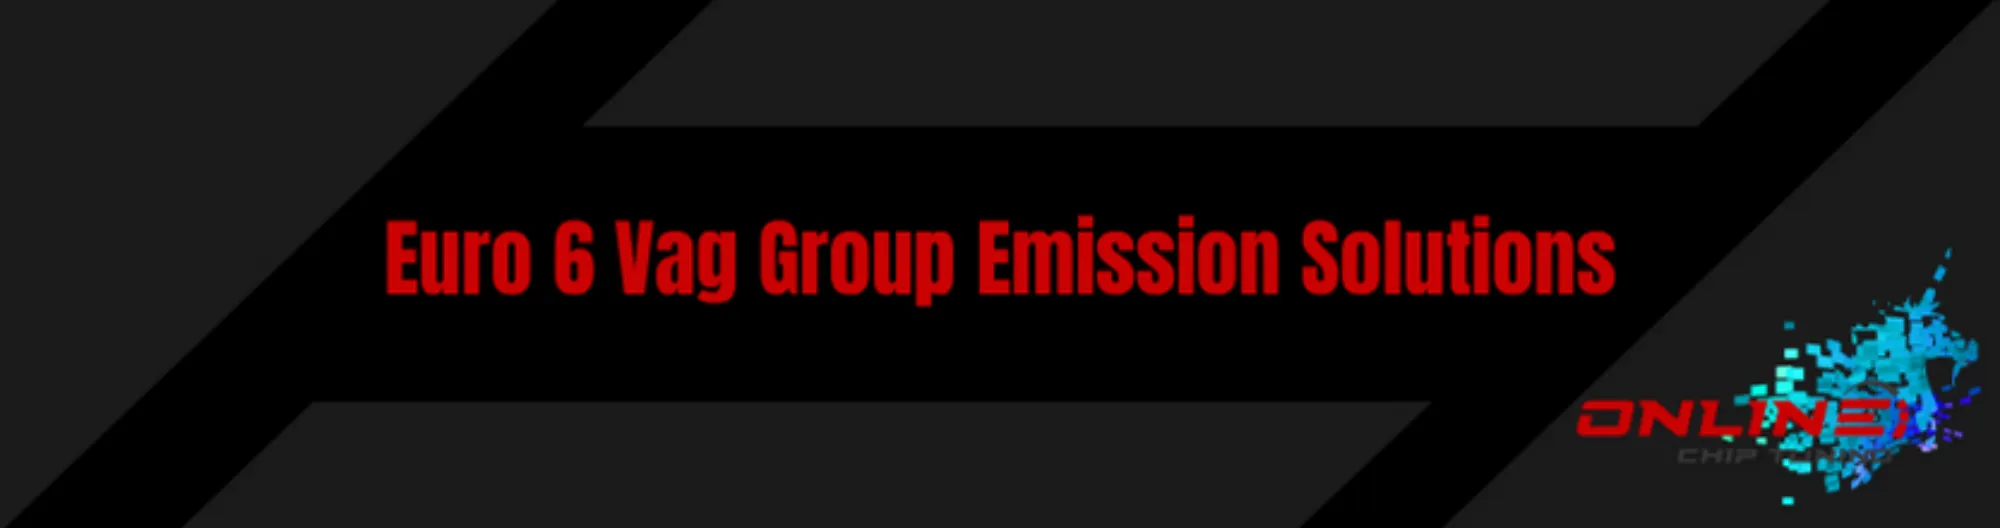 Euro 6 Vag Group Emission Solutions